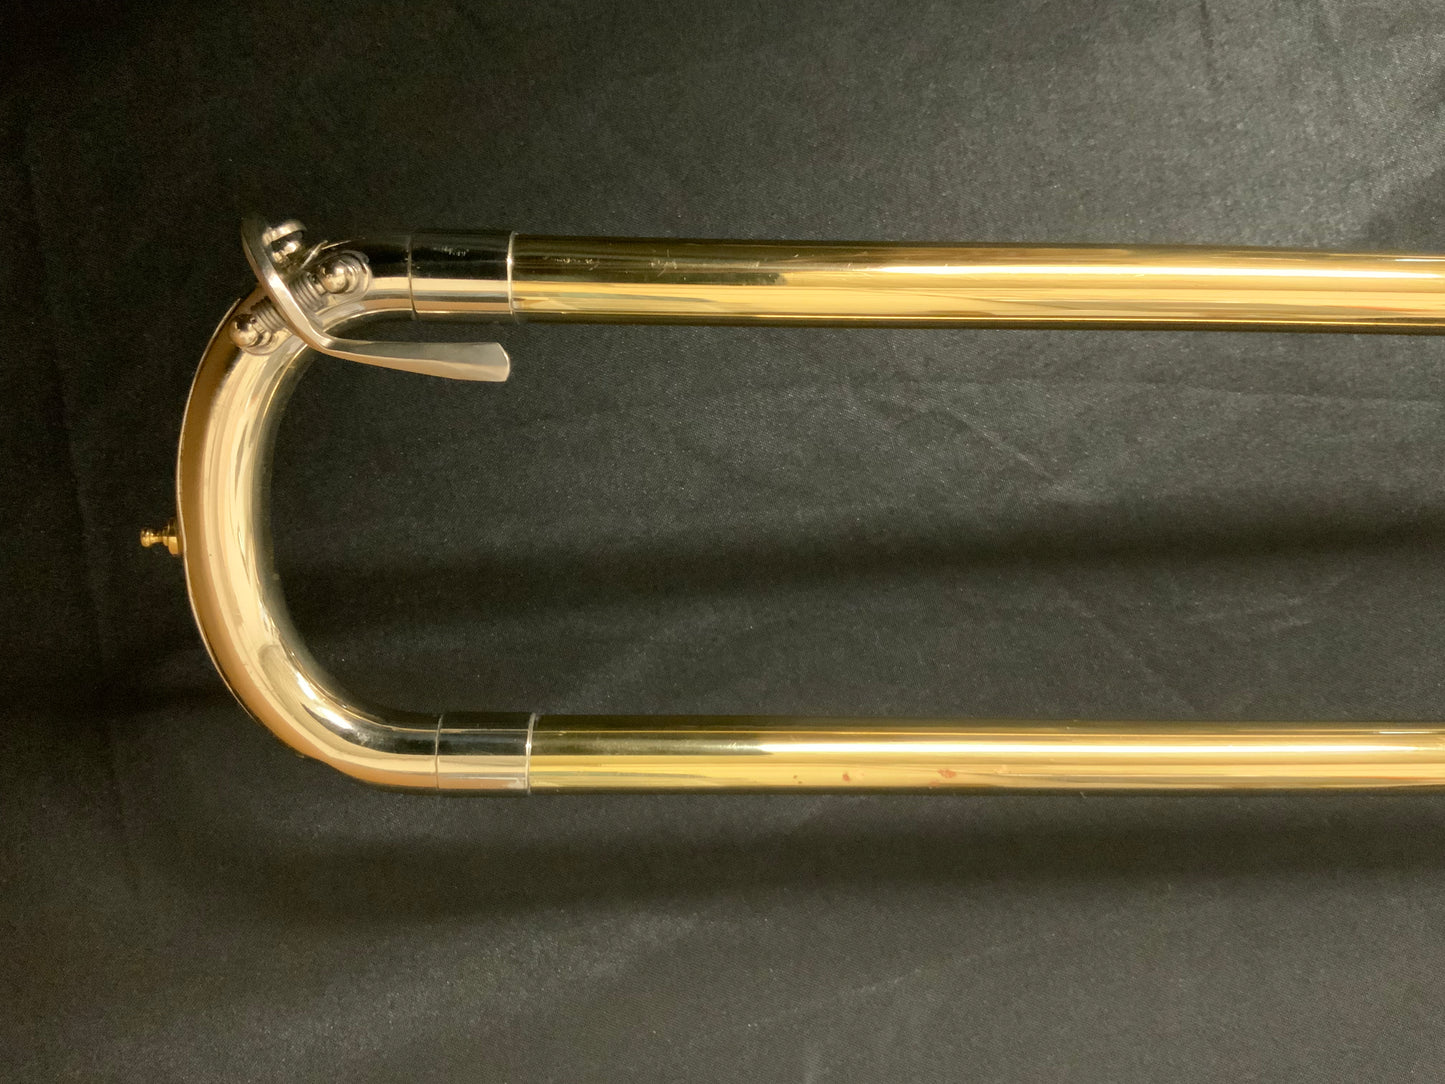 Conn 5H Trombone (used)